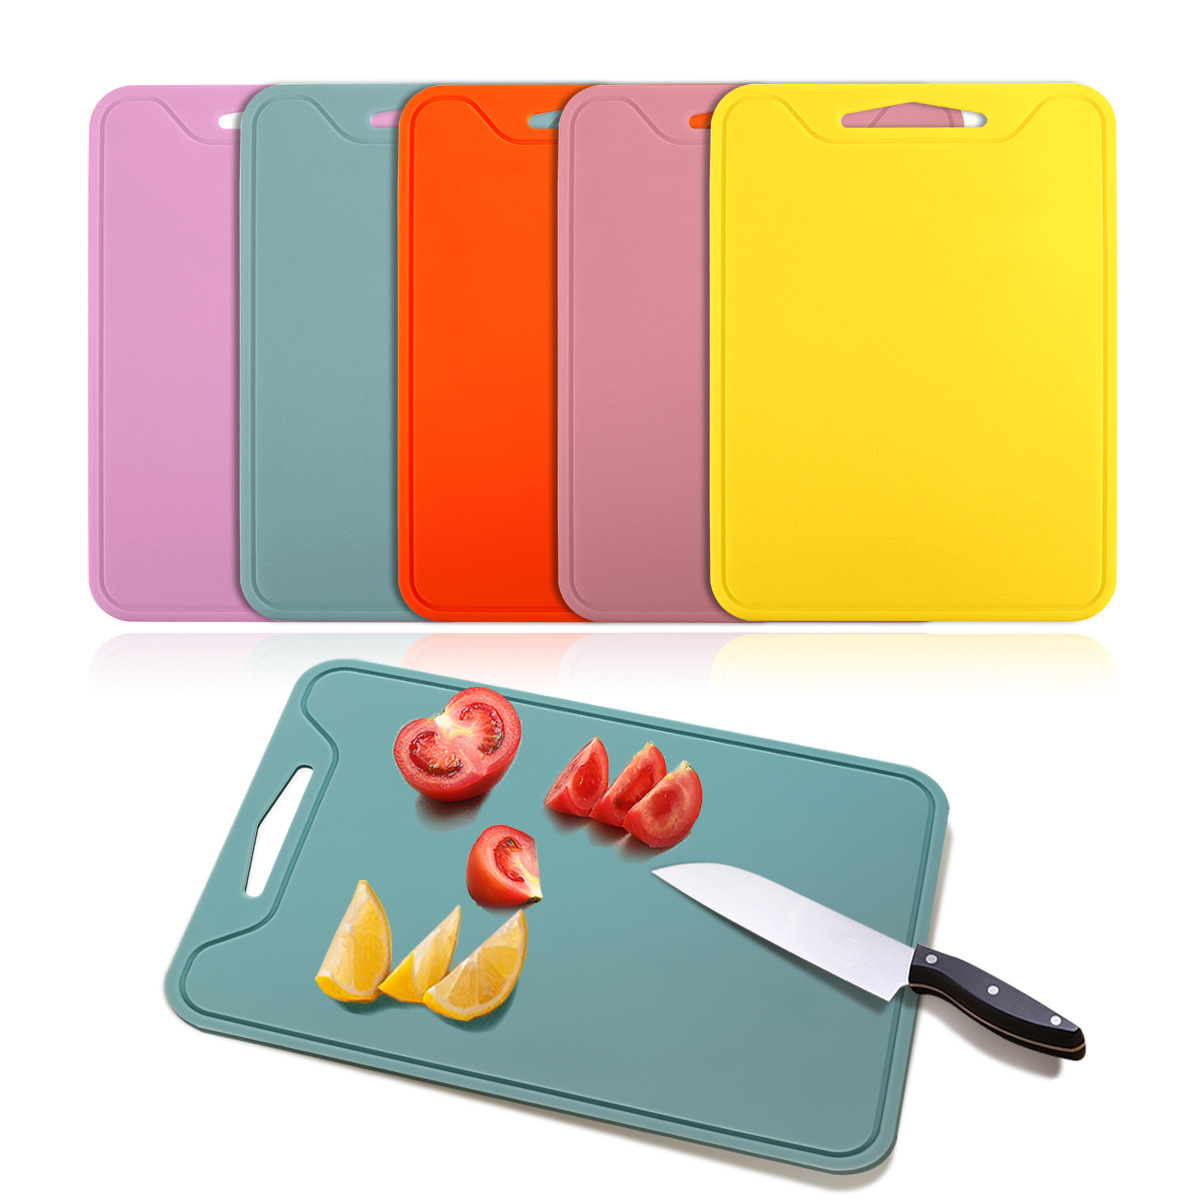 Premium Silicone Portable Cutting Board for Wholesale – Durable Kitchen Essential